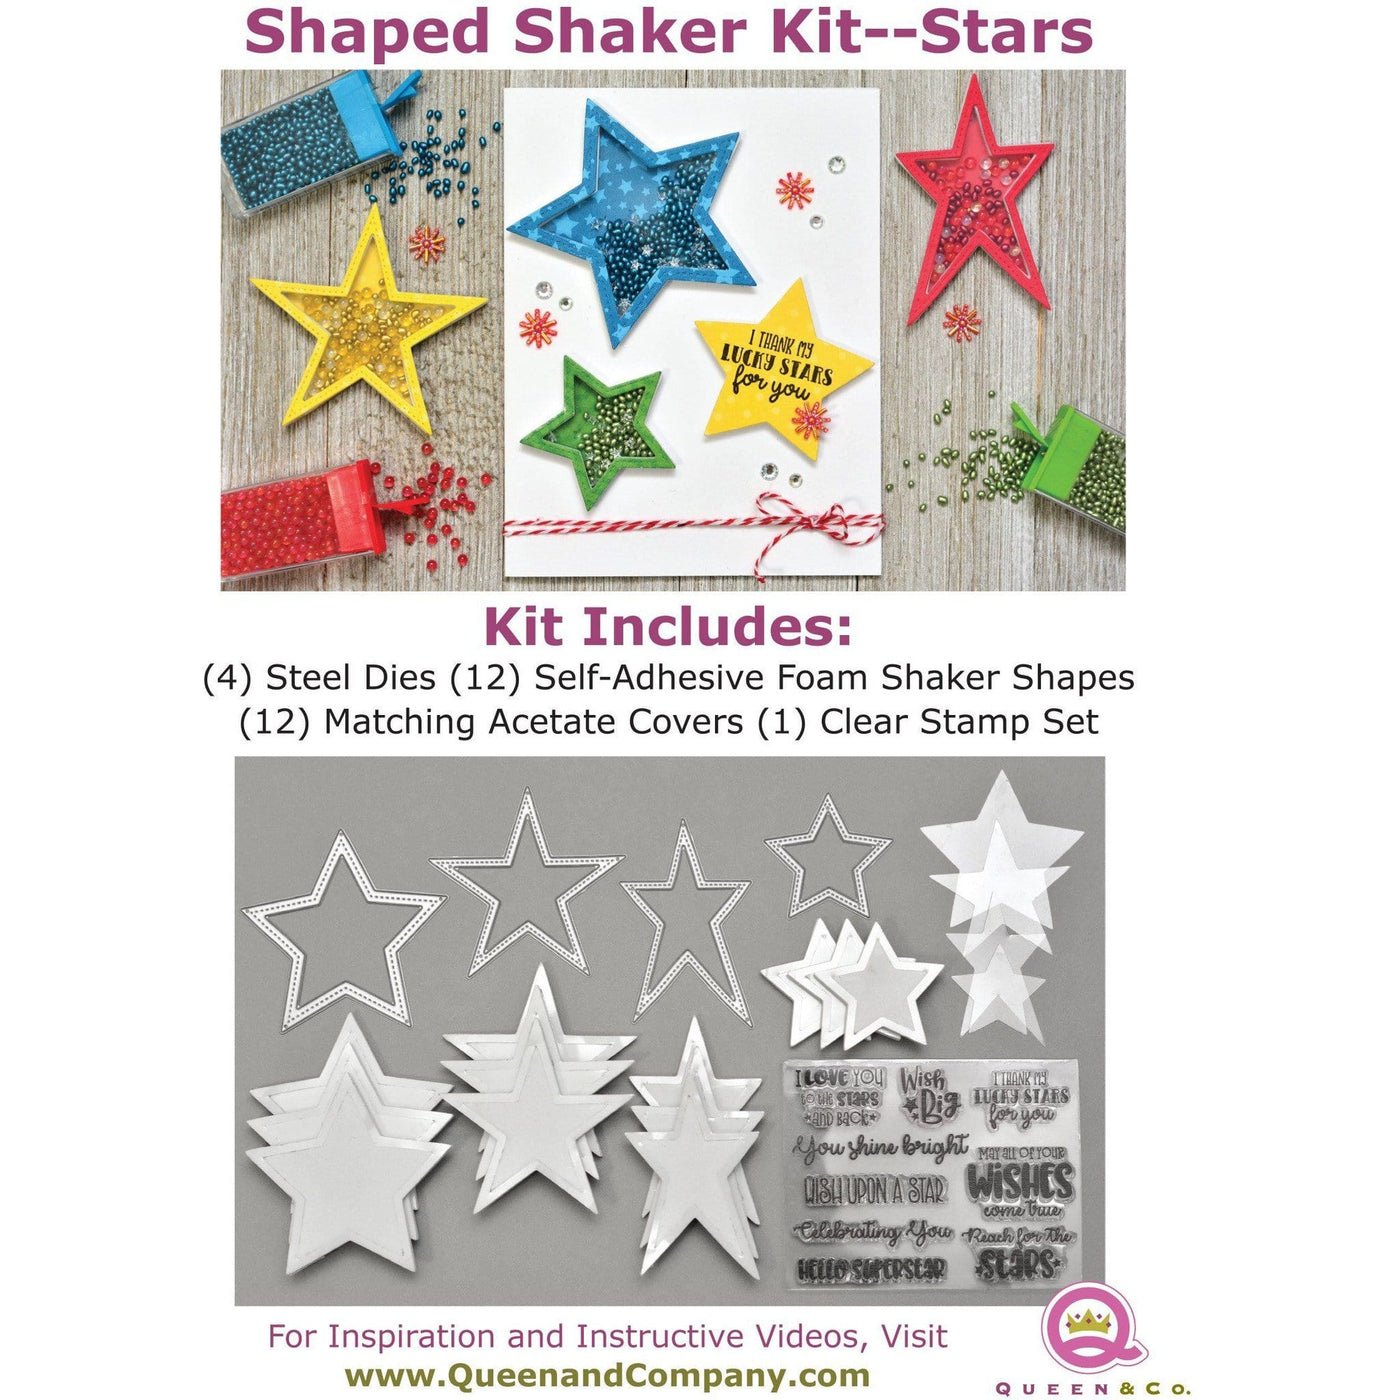 Star Shaped Shaker